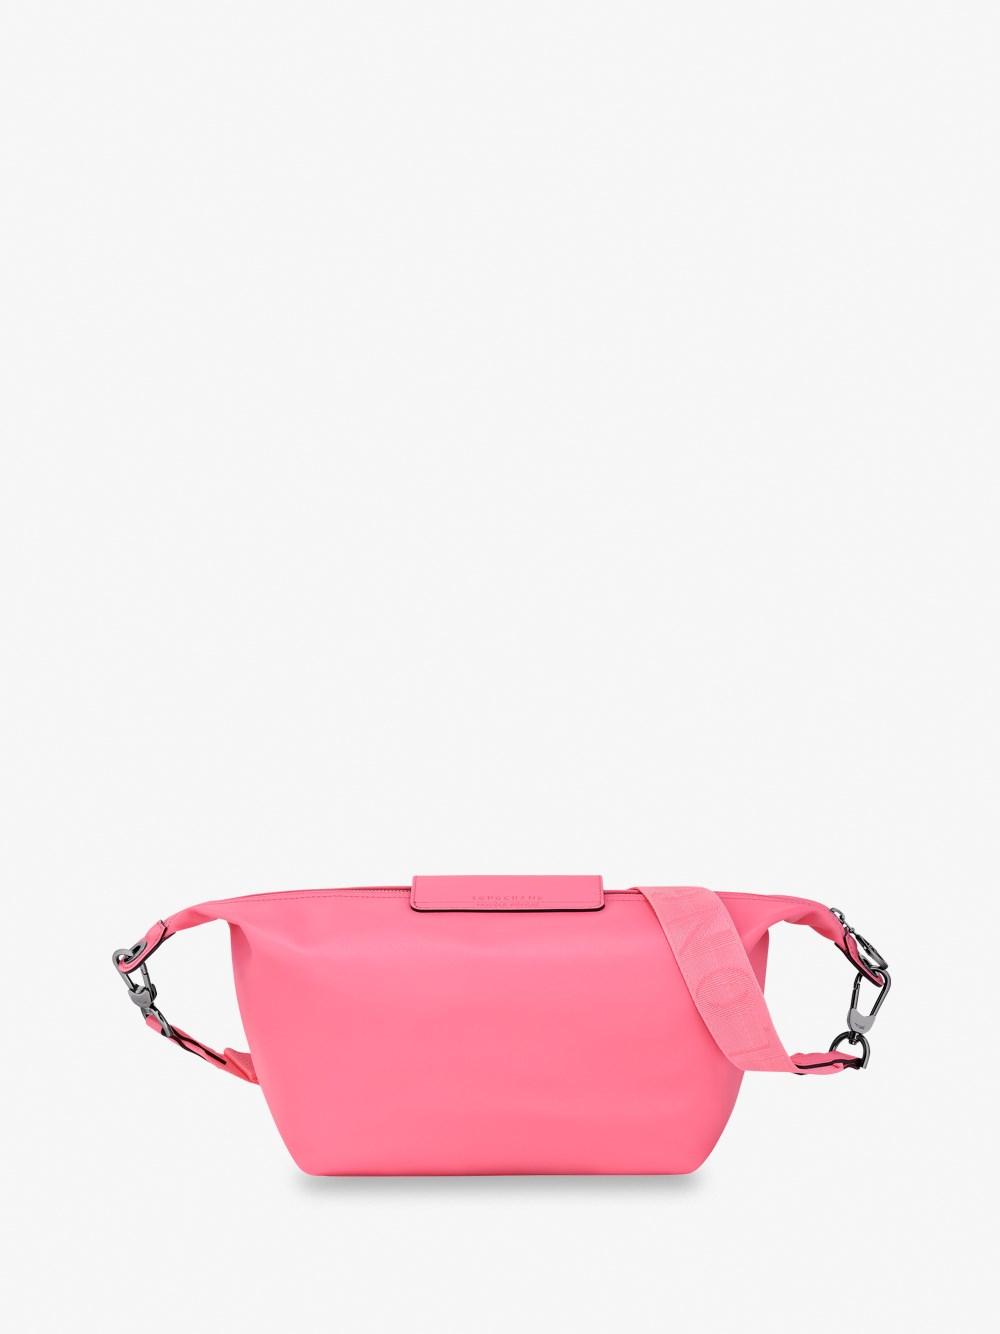 Longchamp Grenadine S Le Pliage Bag in Pink